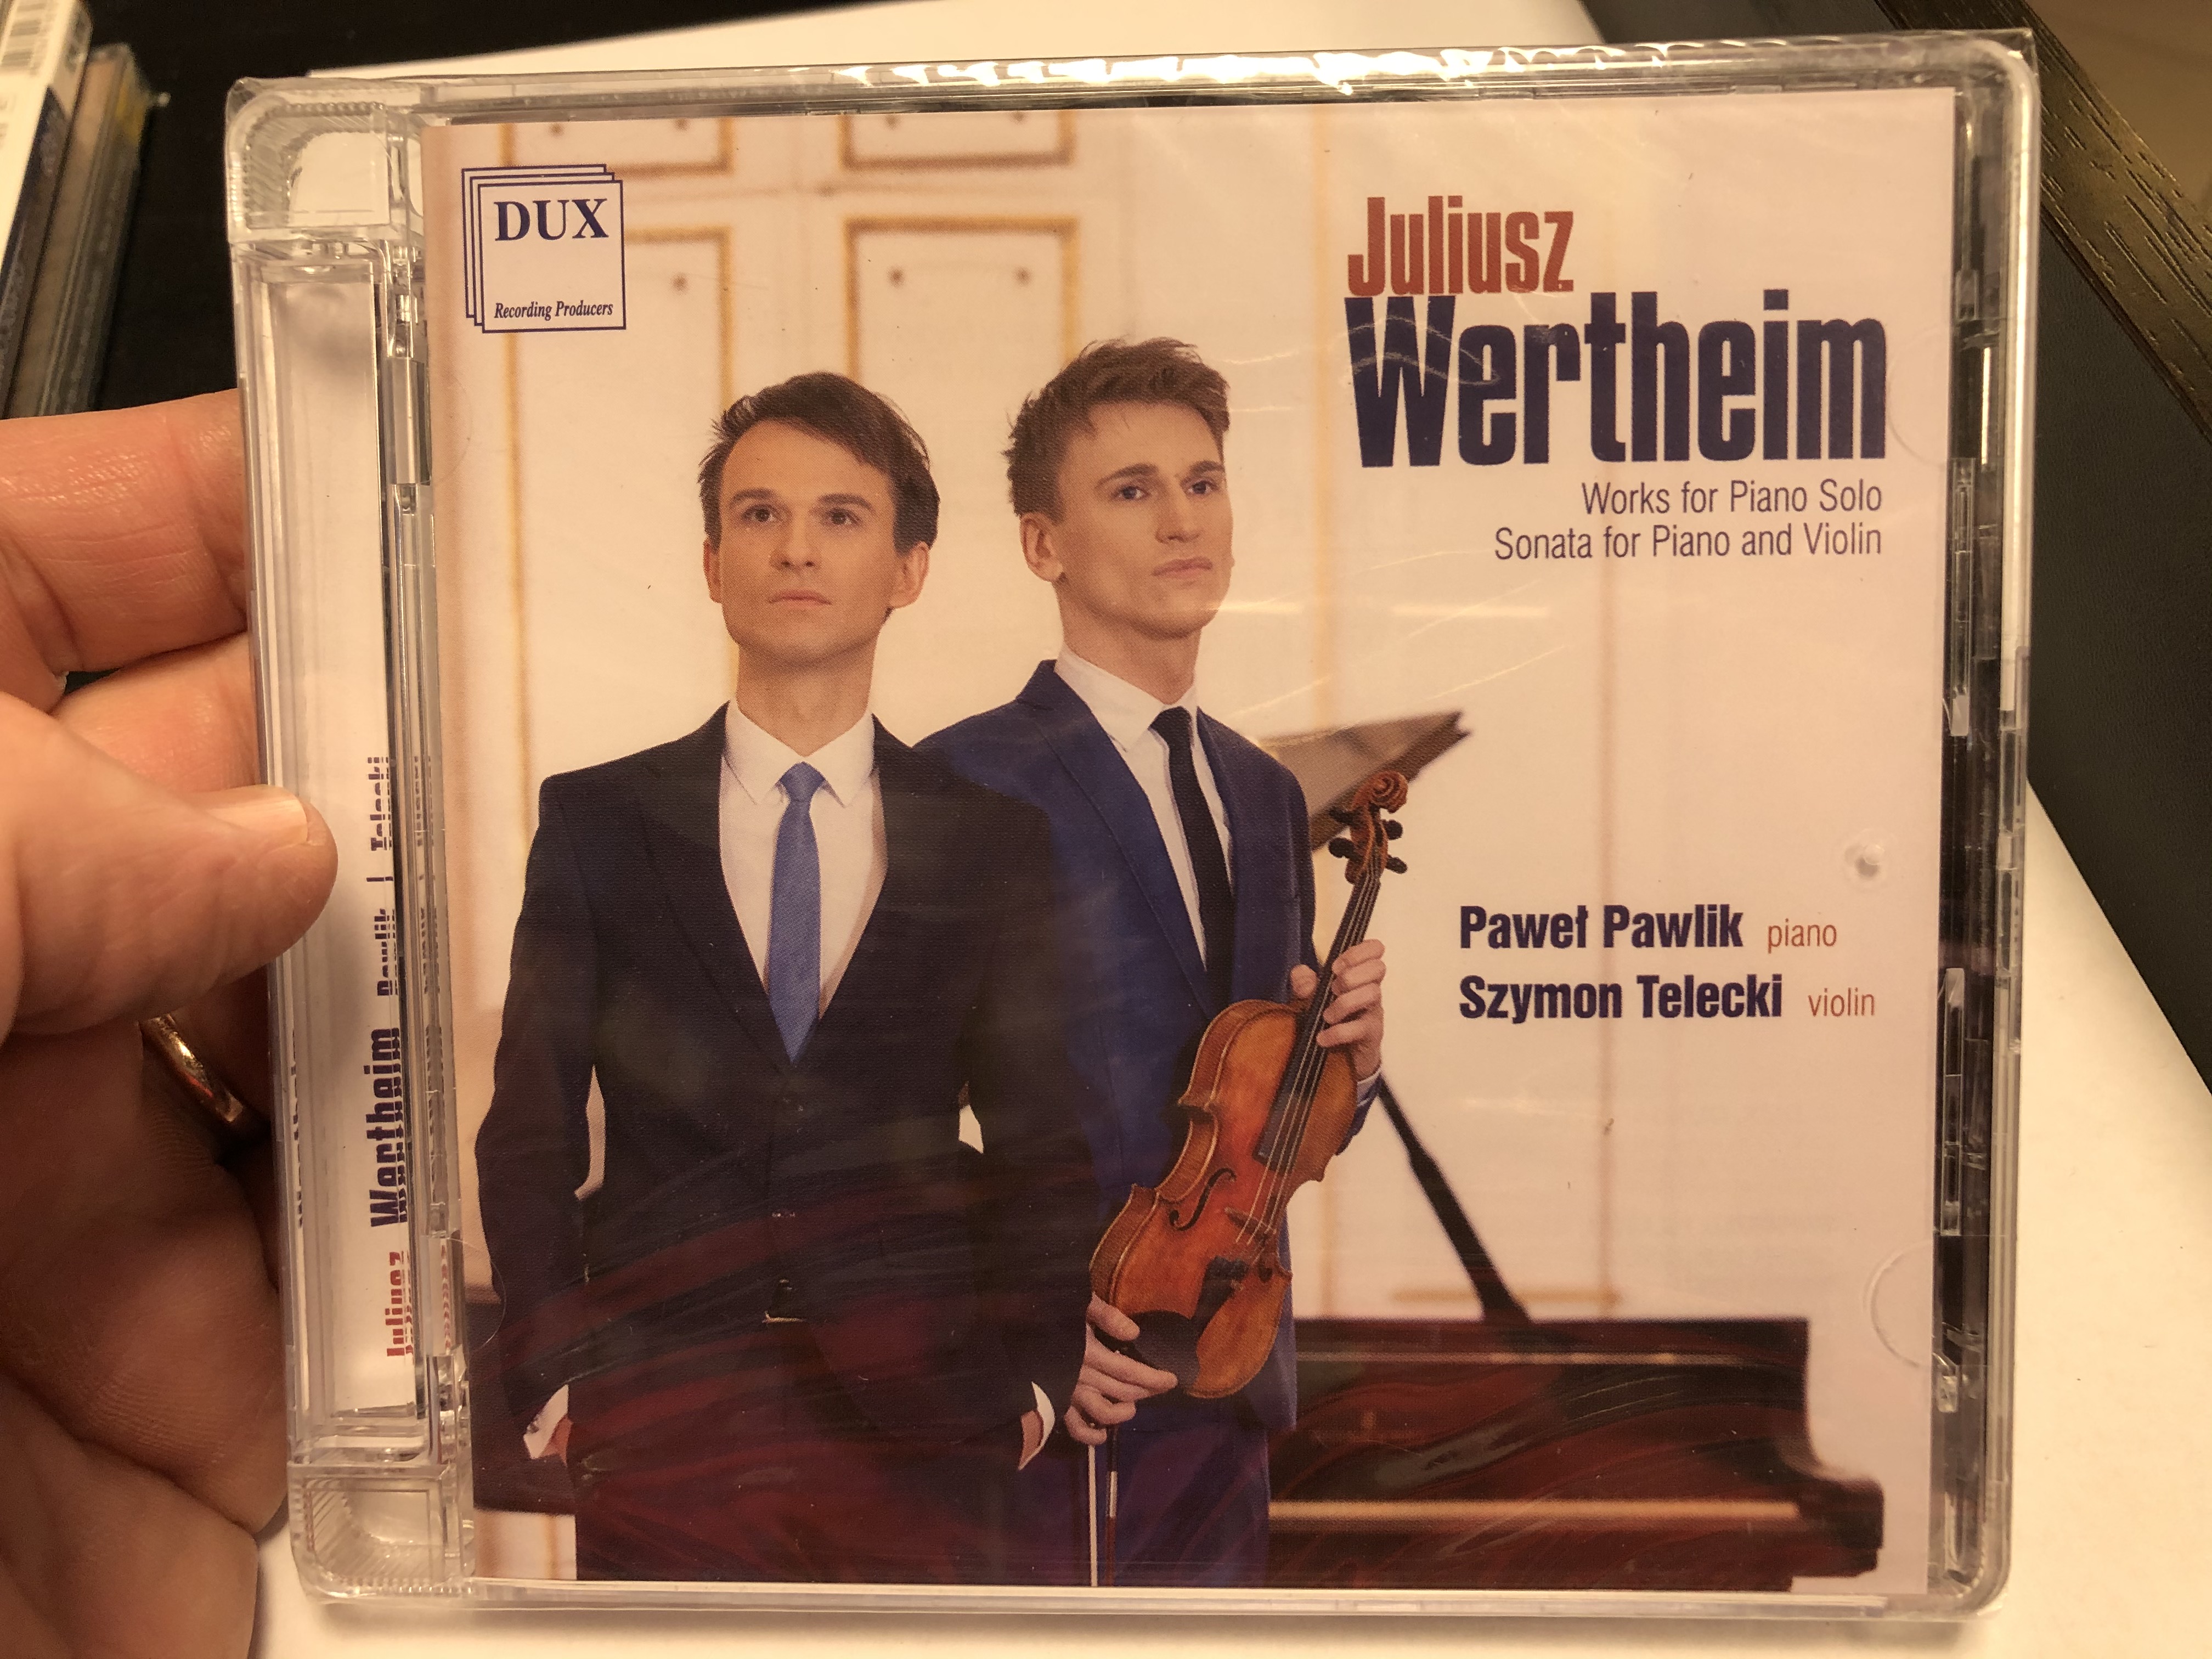 juliusz-wetheim-works-for-piano-solo-sonata-for-piano-and-violin-pawel-pawlik-piano-szymon-telecki-violin-dux-recording-audio-cd-2020-dux-1442-1-.jpg